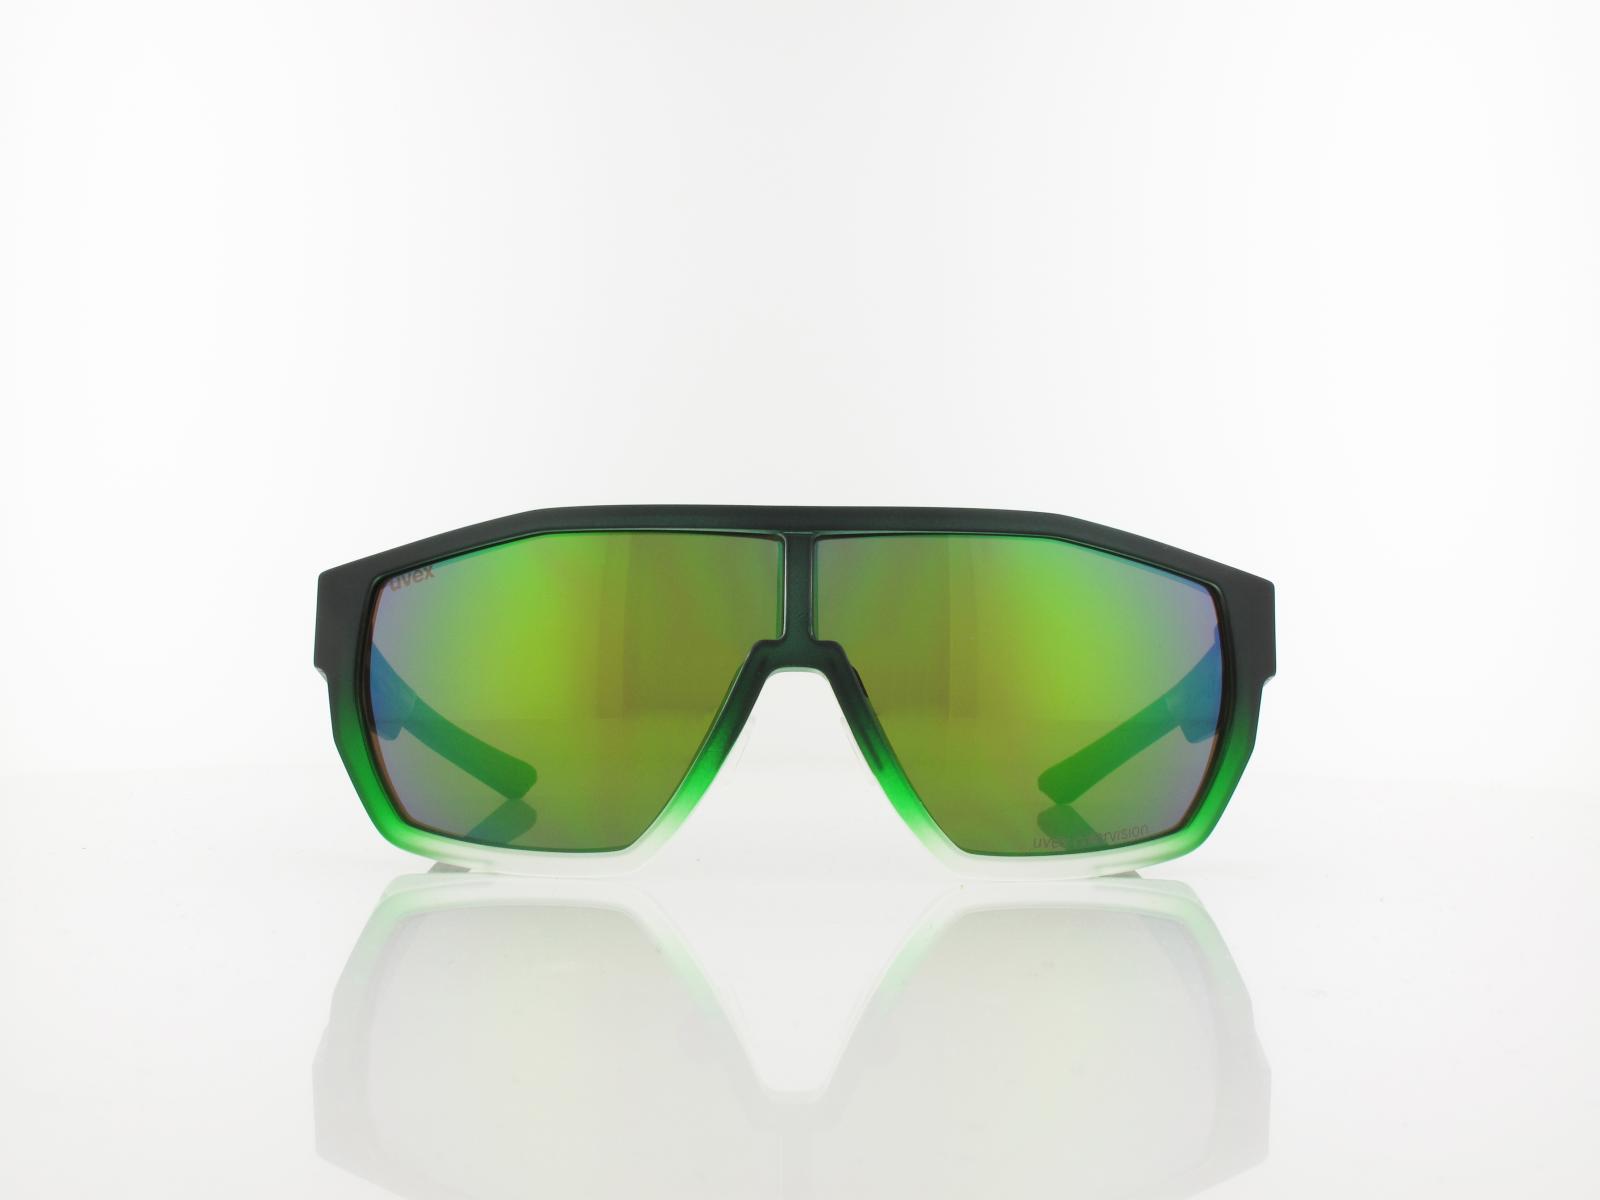 UVEX | mtn style CV S533036 7795 66 | green matt fade / colorvision mirror green